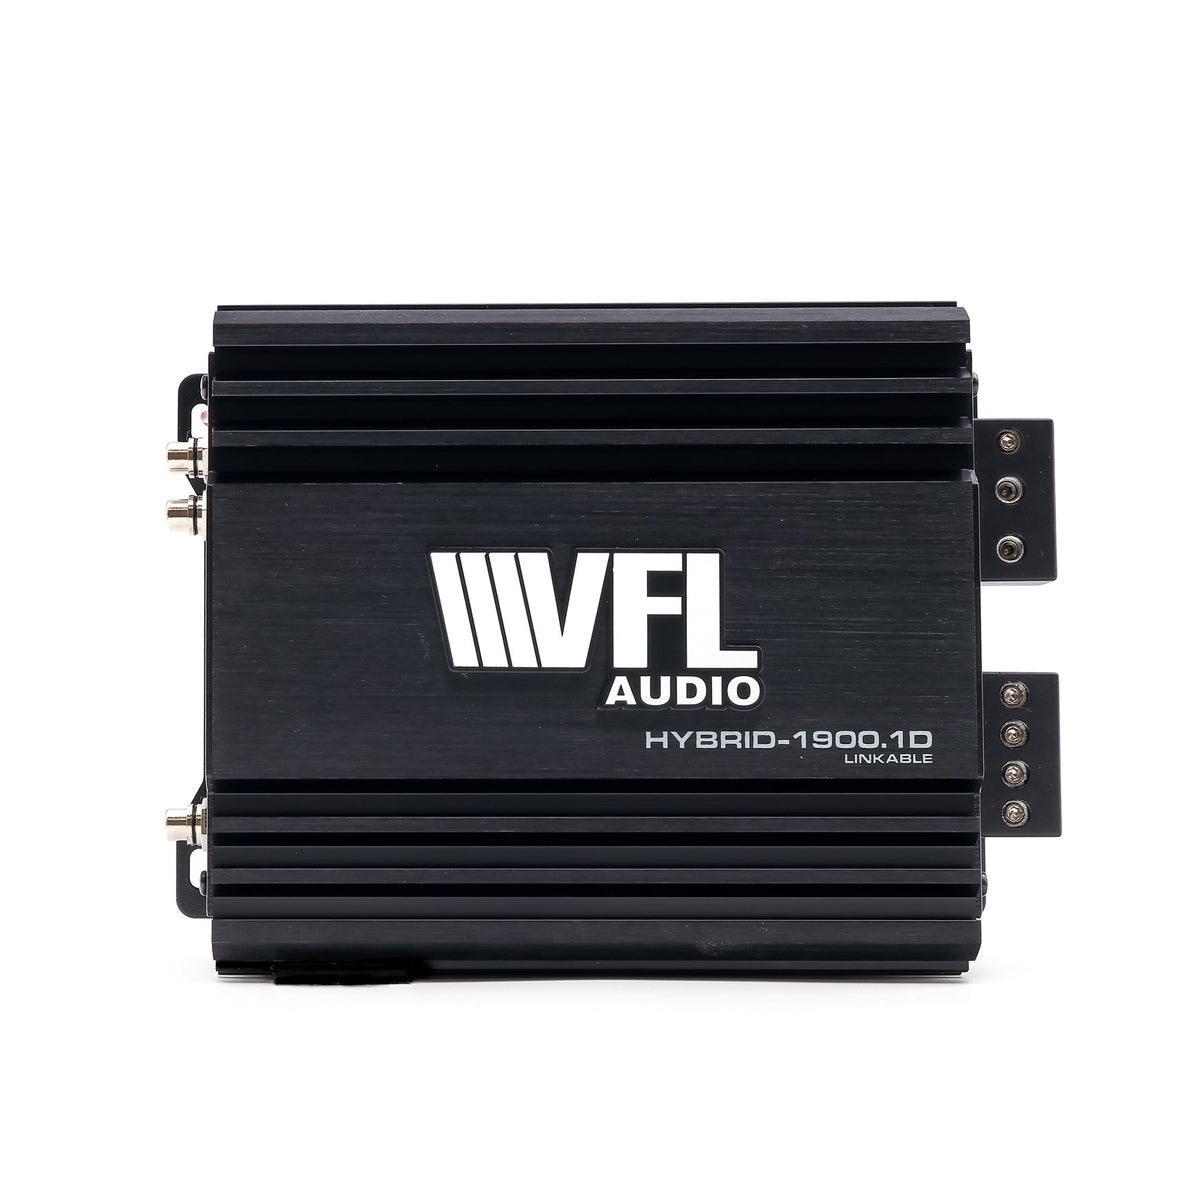 VFL Hybrid 1900.1 Amplifier - American Bass Audio